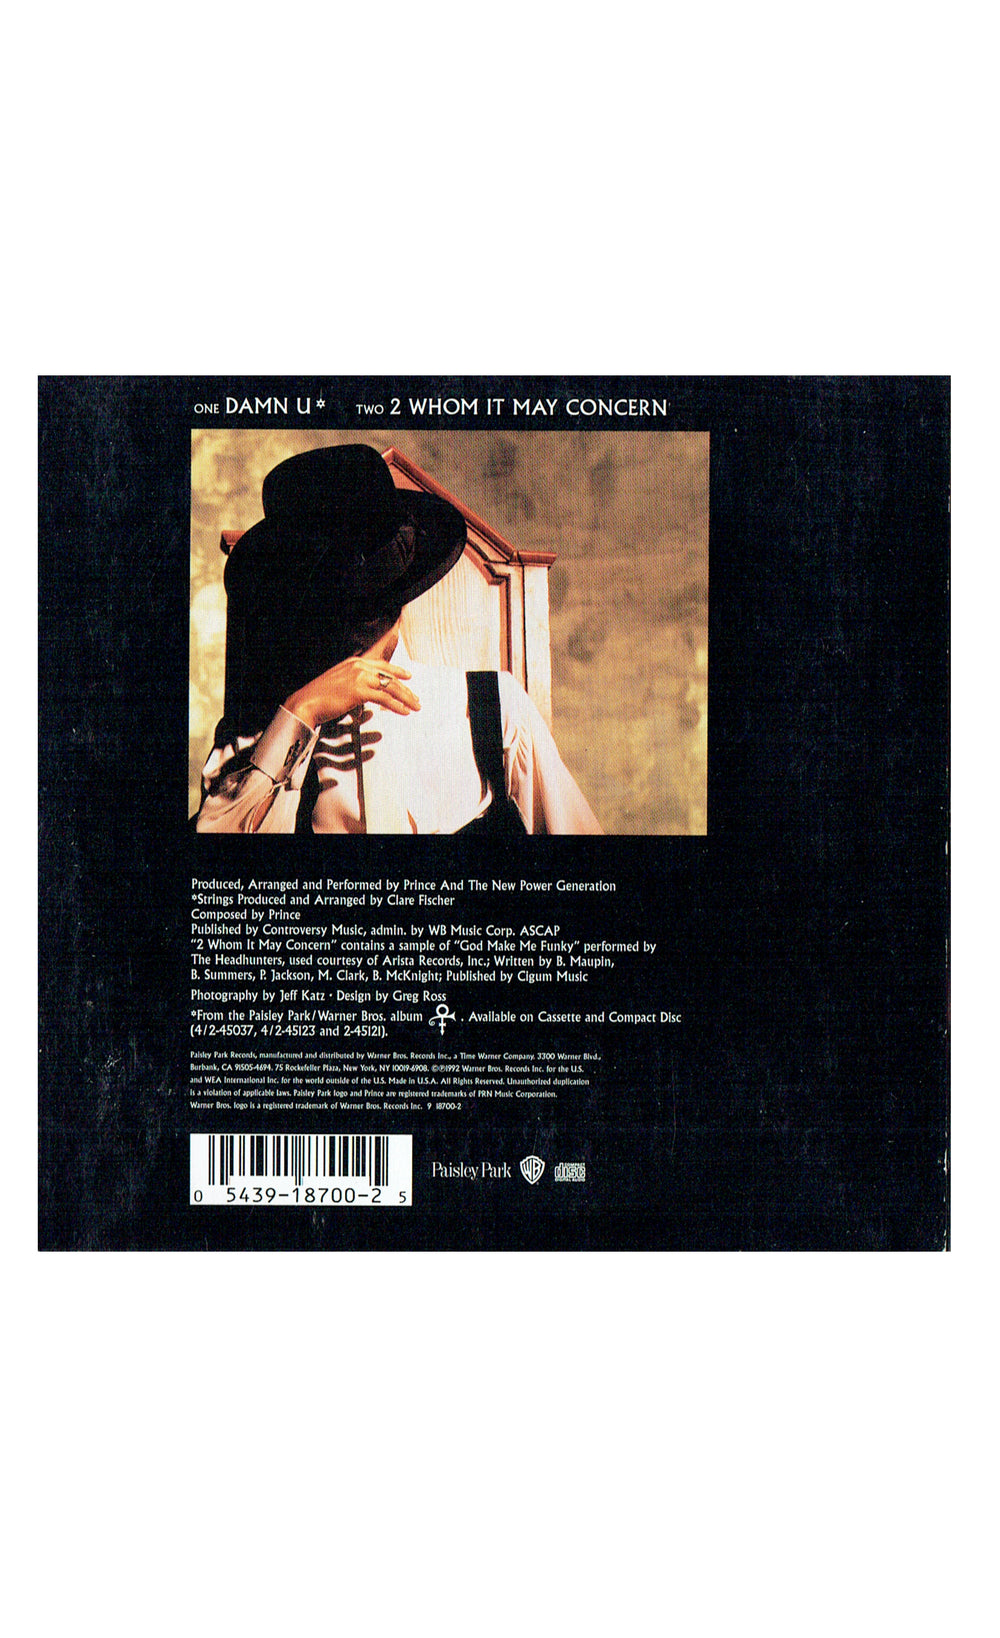 Prince DAMN U 2 Track CD Single 1992 Original & The New Power Generation SMS